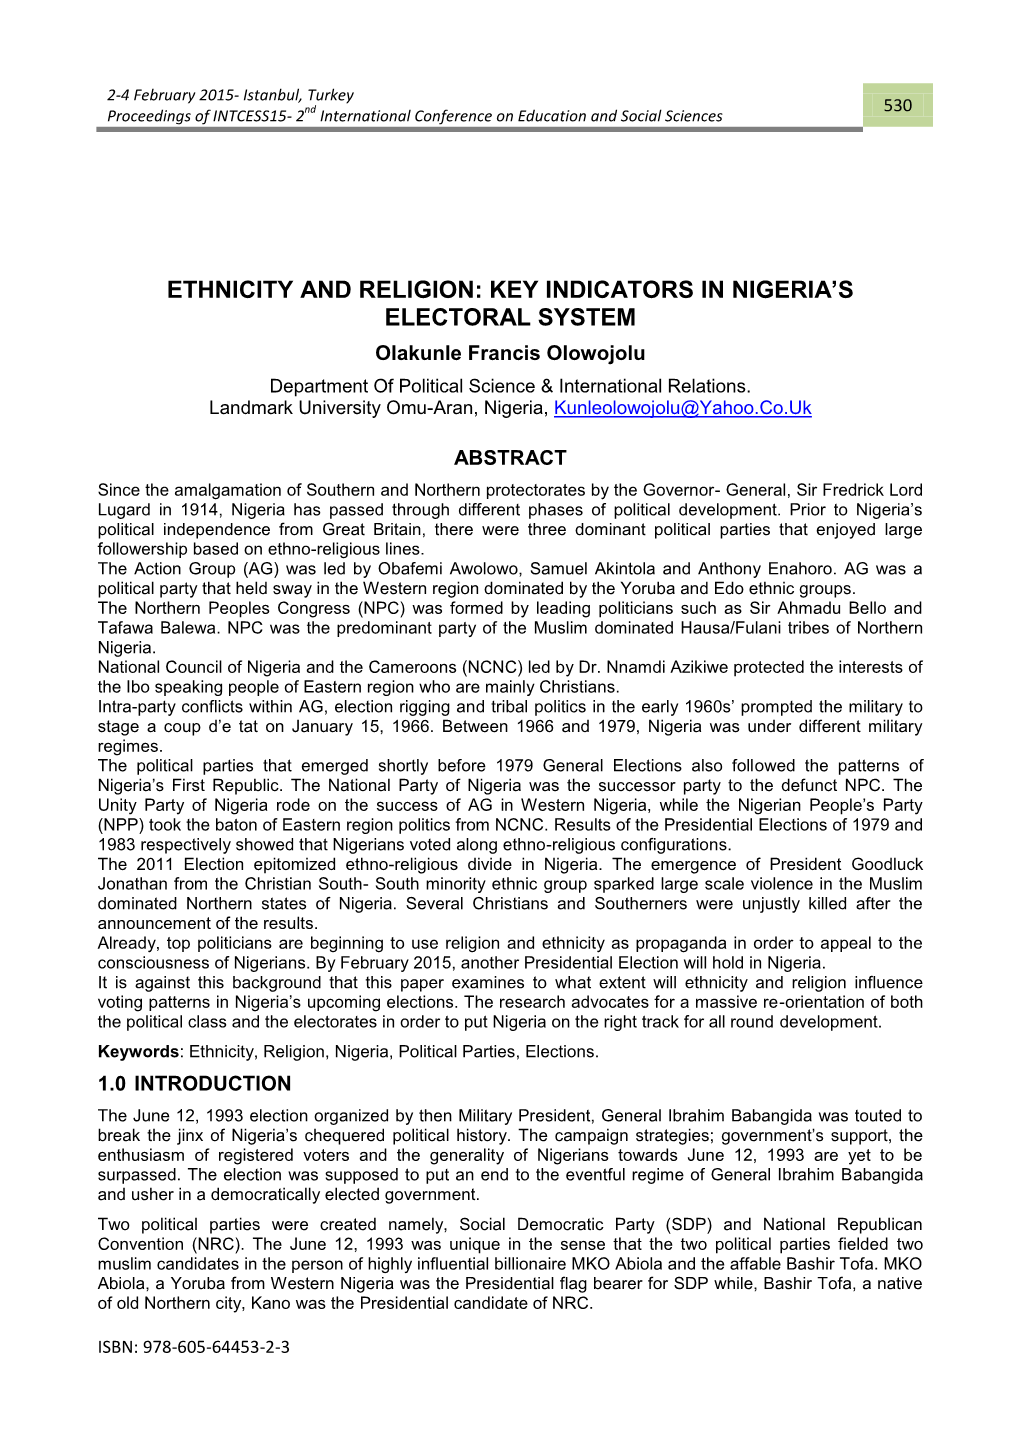 Ethnicity and Religion: Key Indicators in Nigeria's